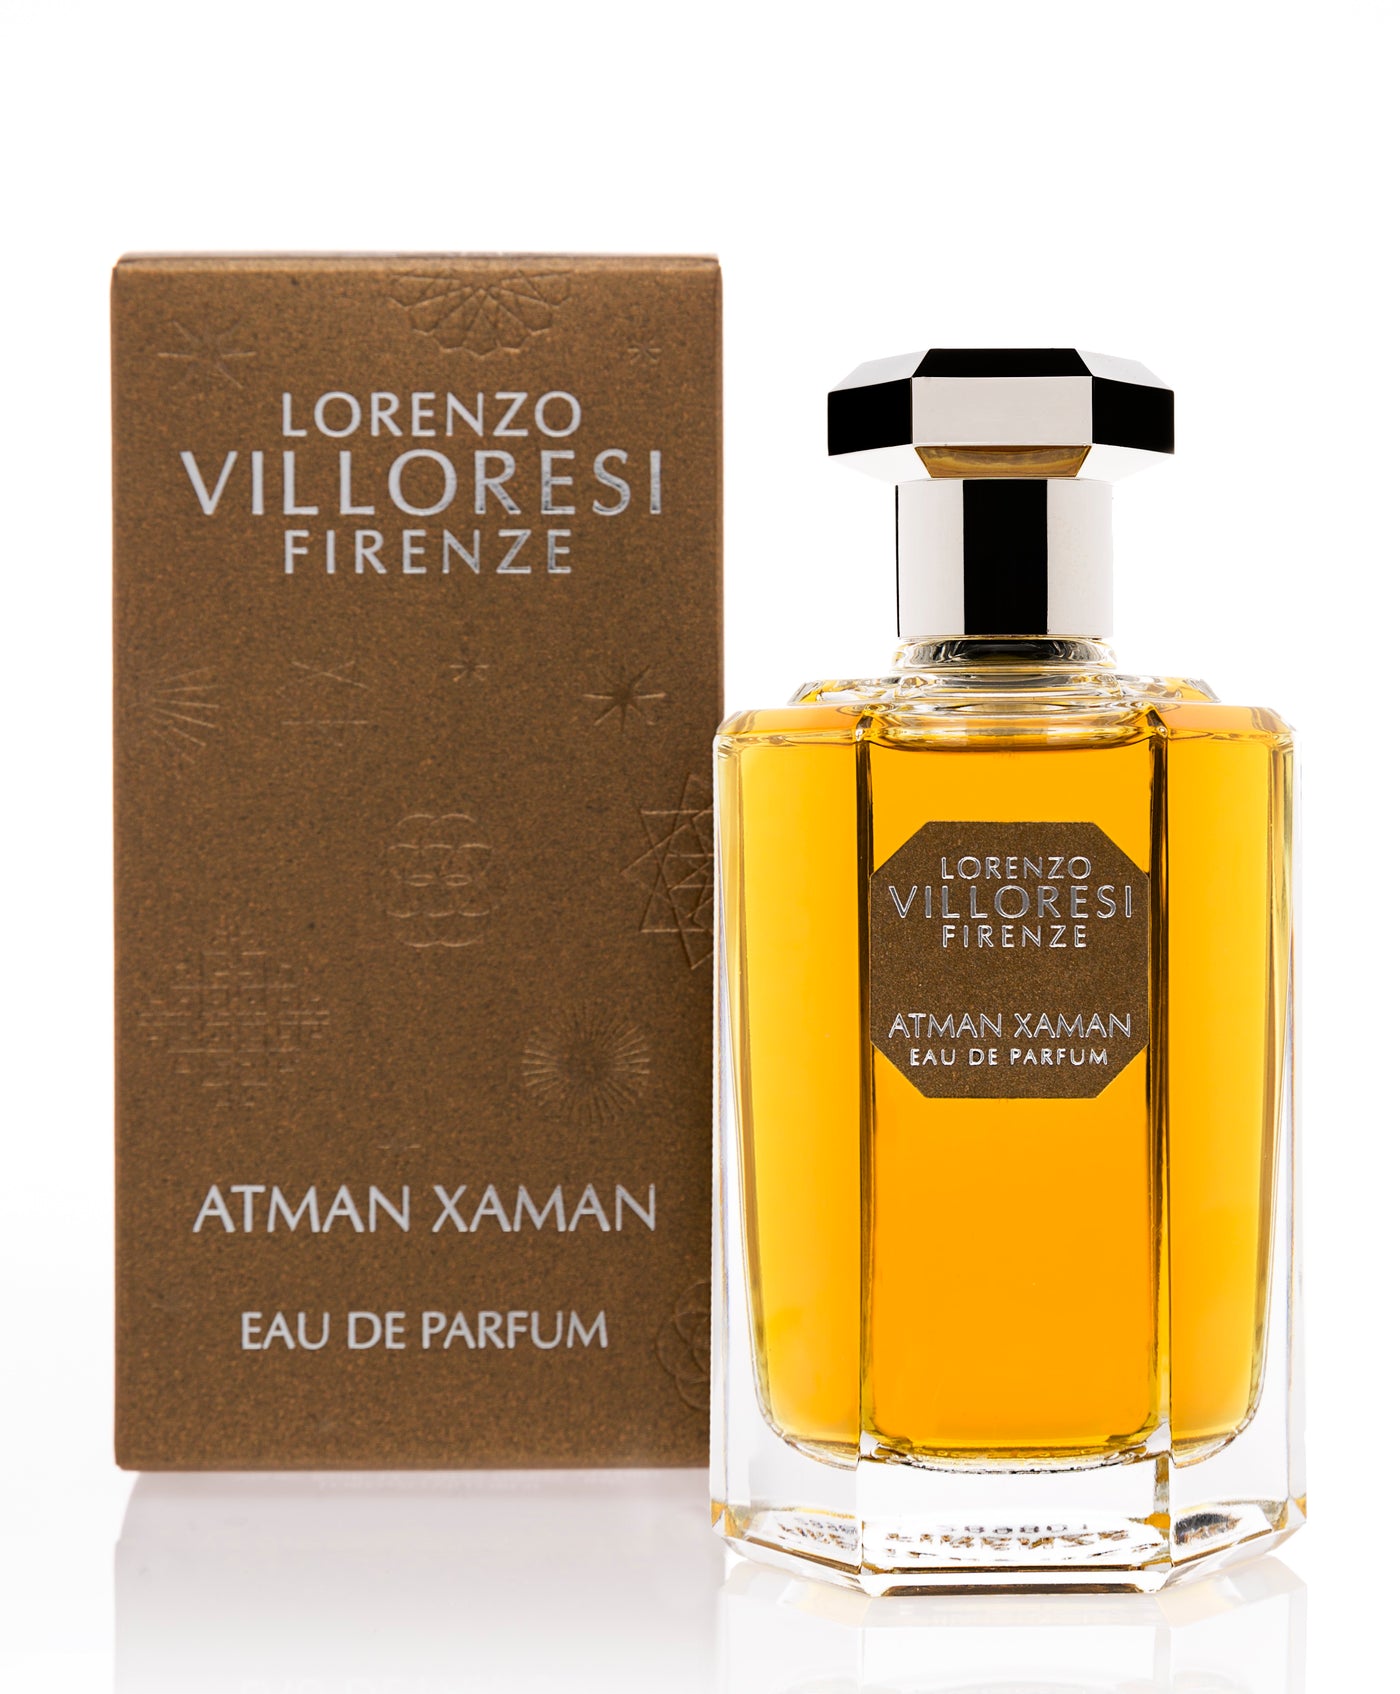 Atman Xaman - Eau de Parfum